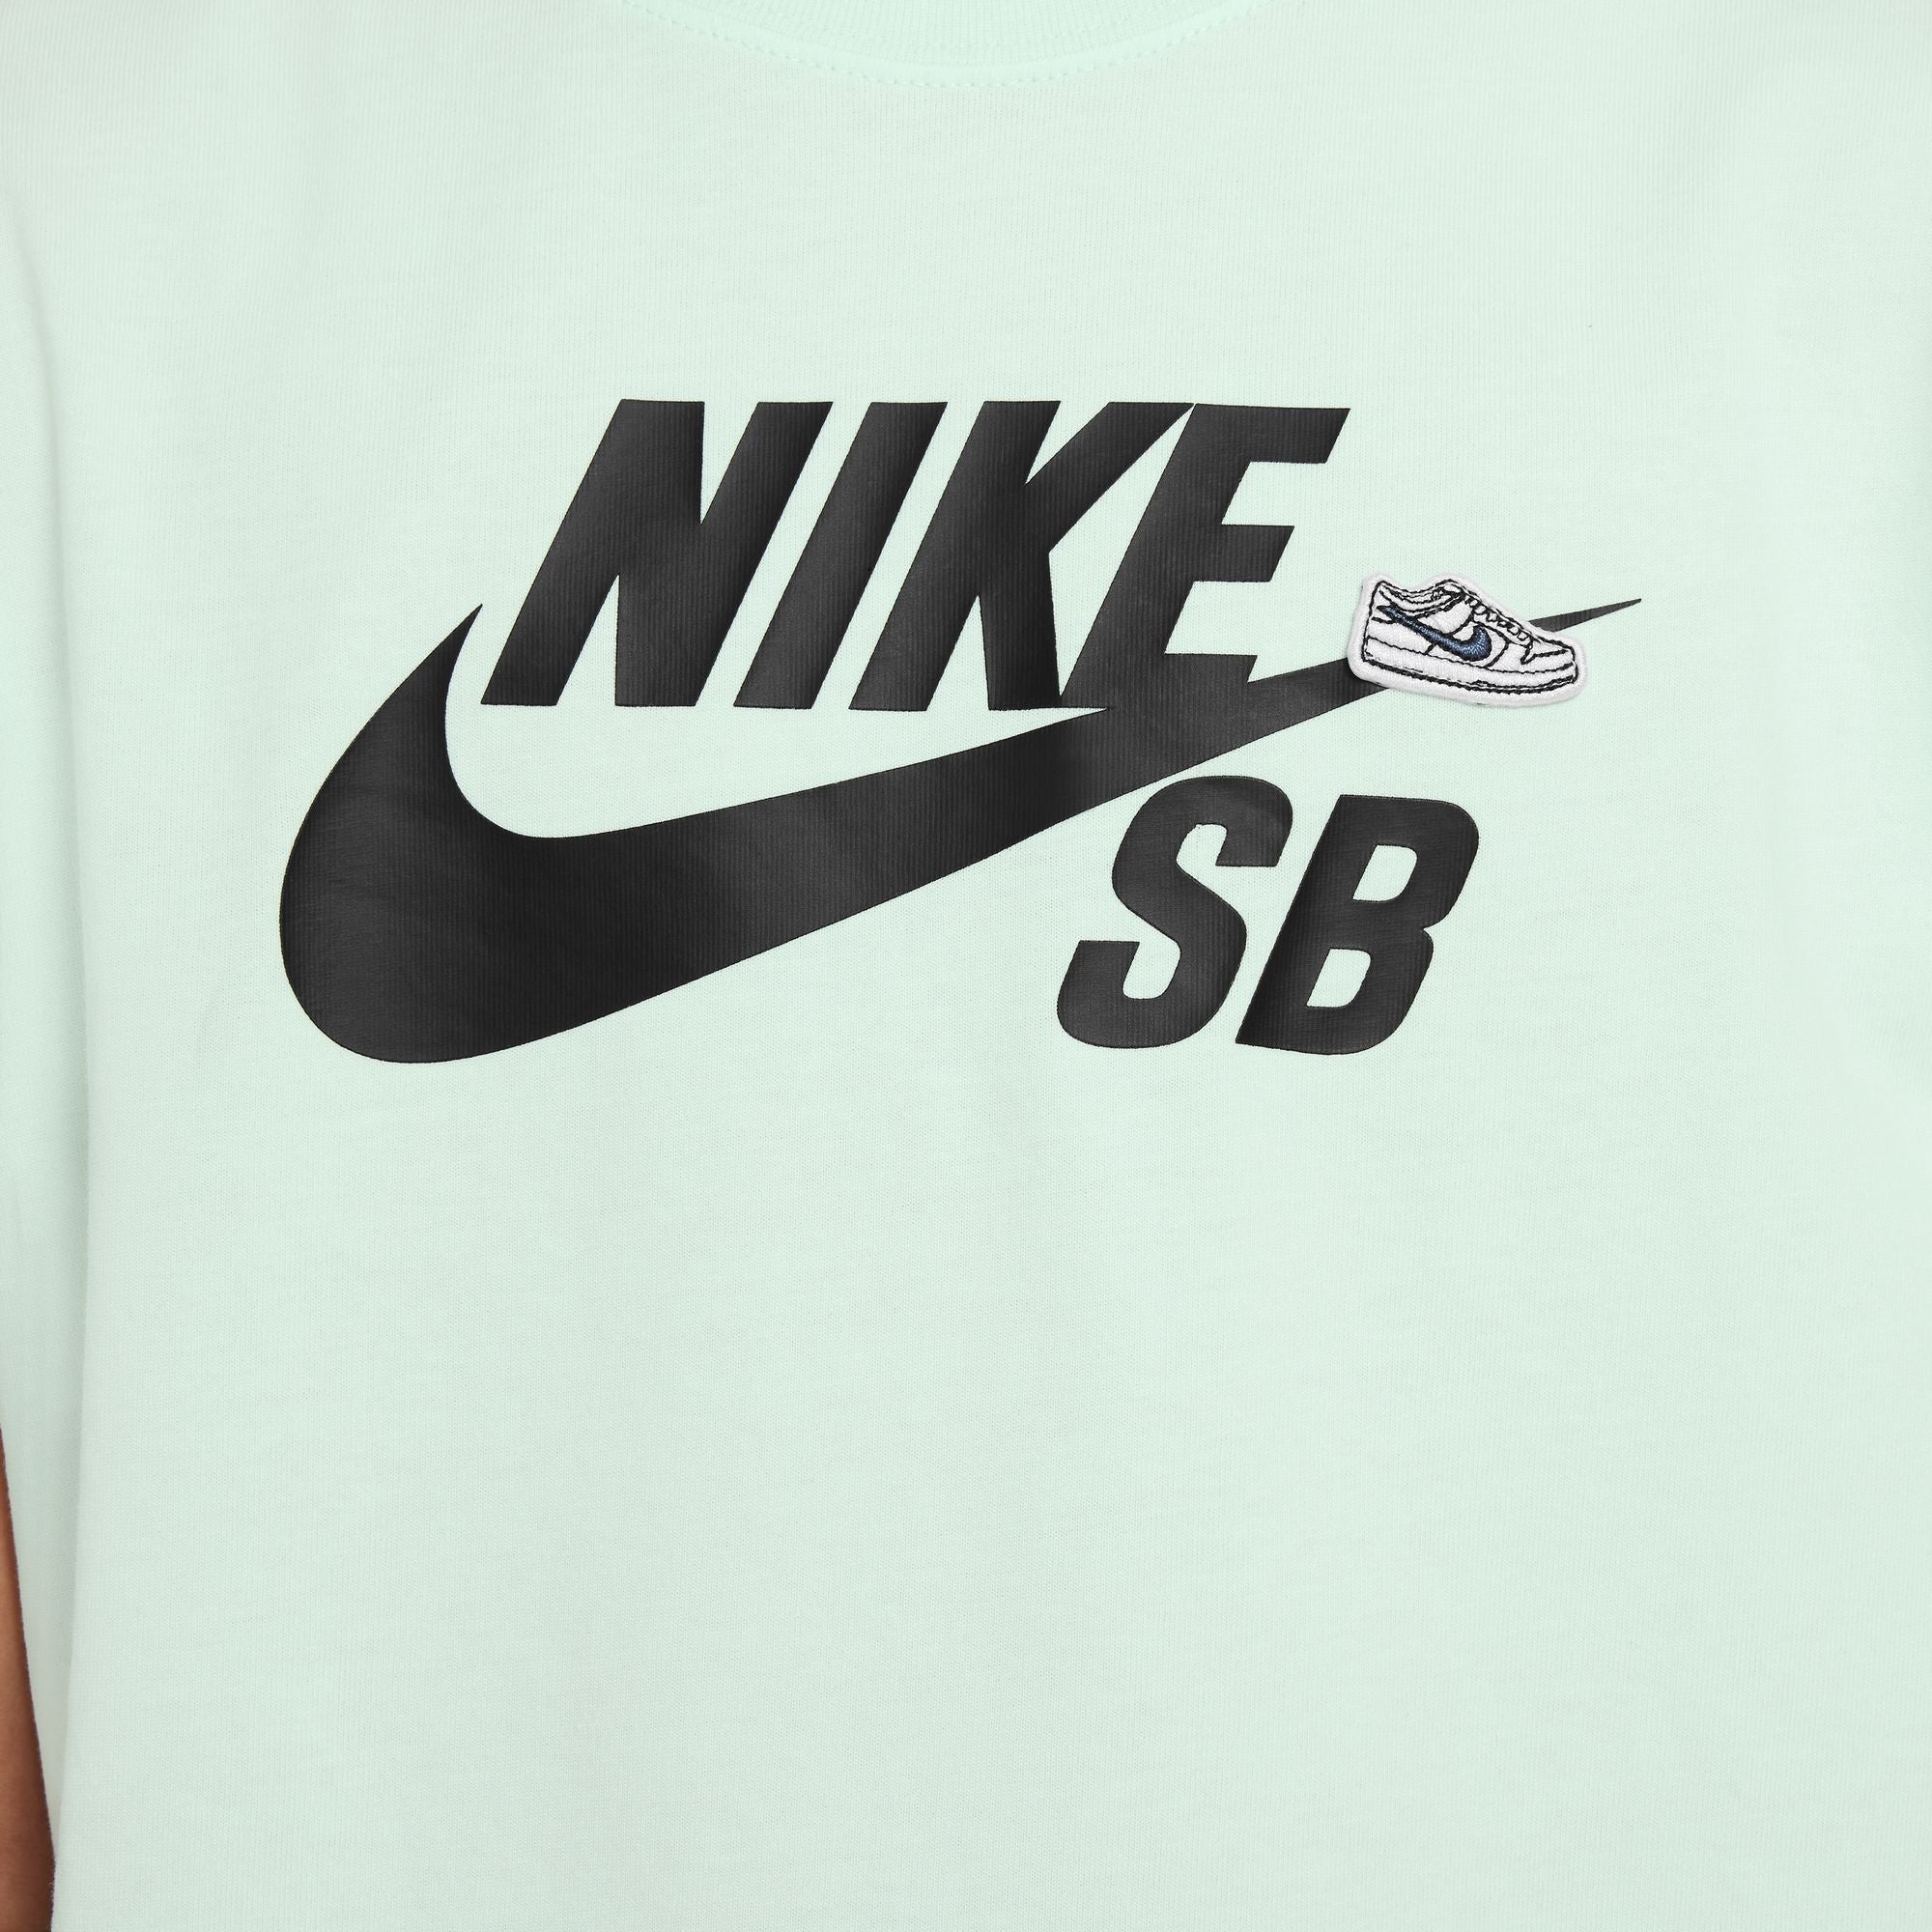 Nike SB Big Kids' T-Shirt Barely Green